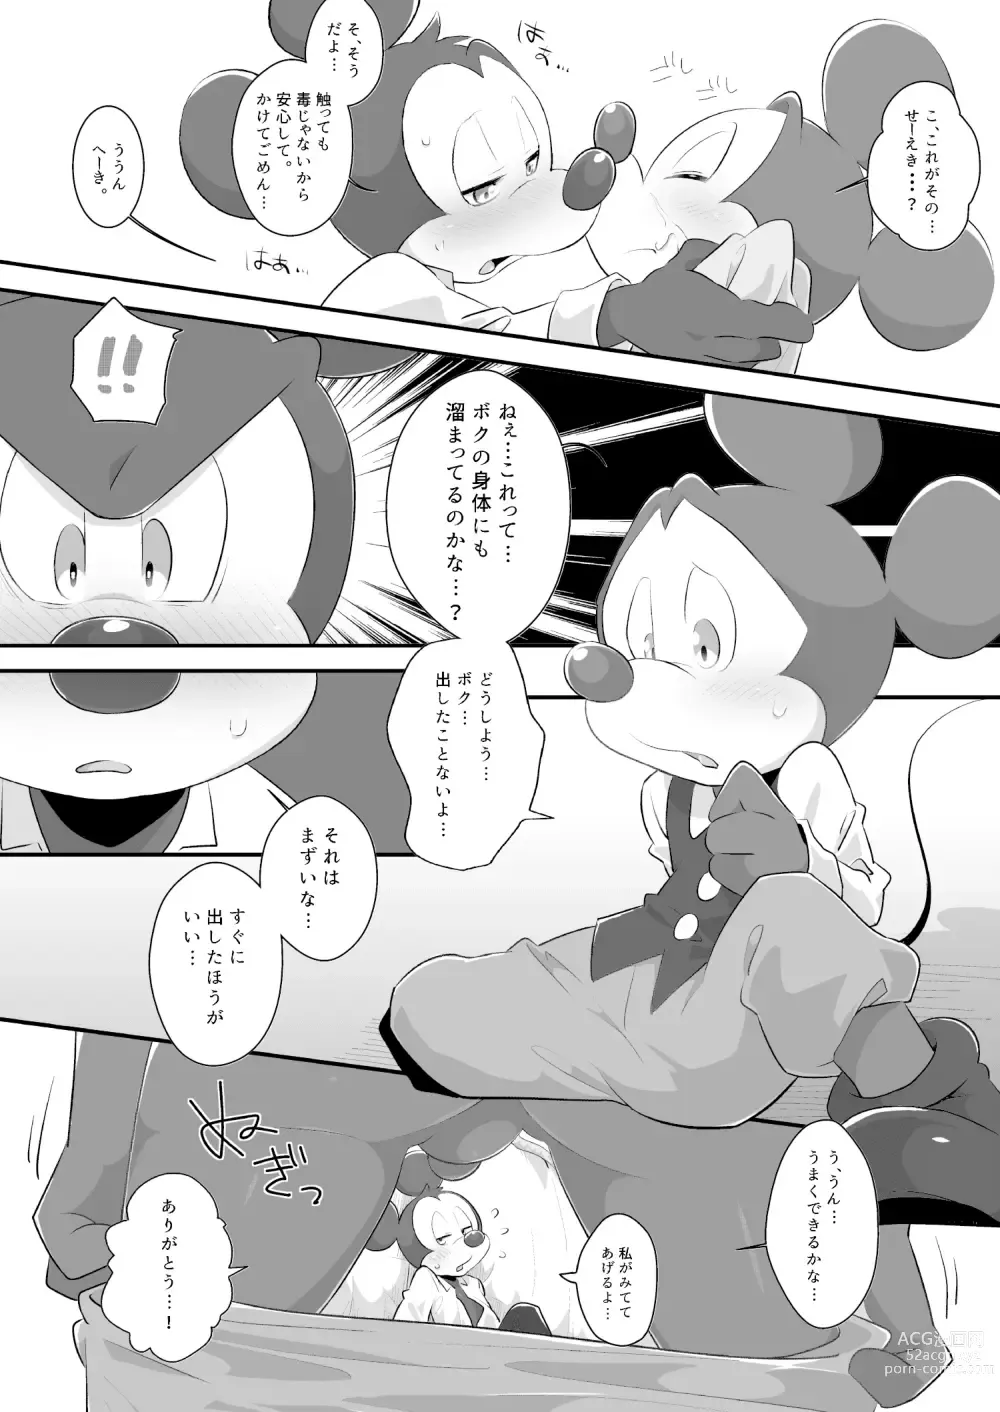 Page 9 of doujinshi Kimi ga  Oshiete Kureta Koto - The things you told me